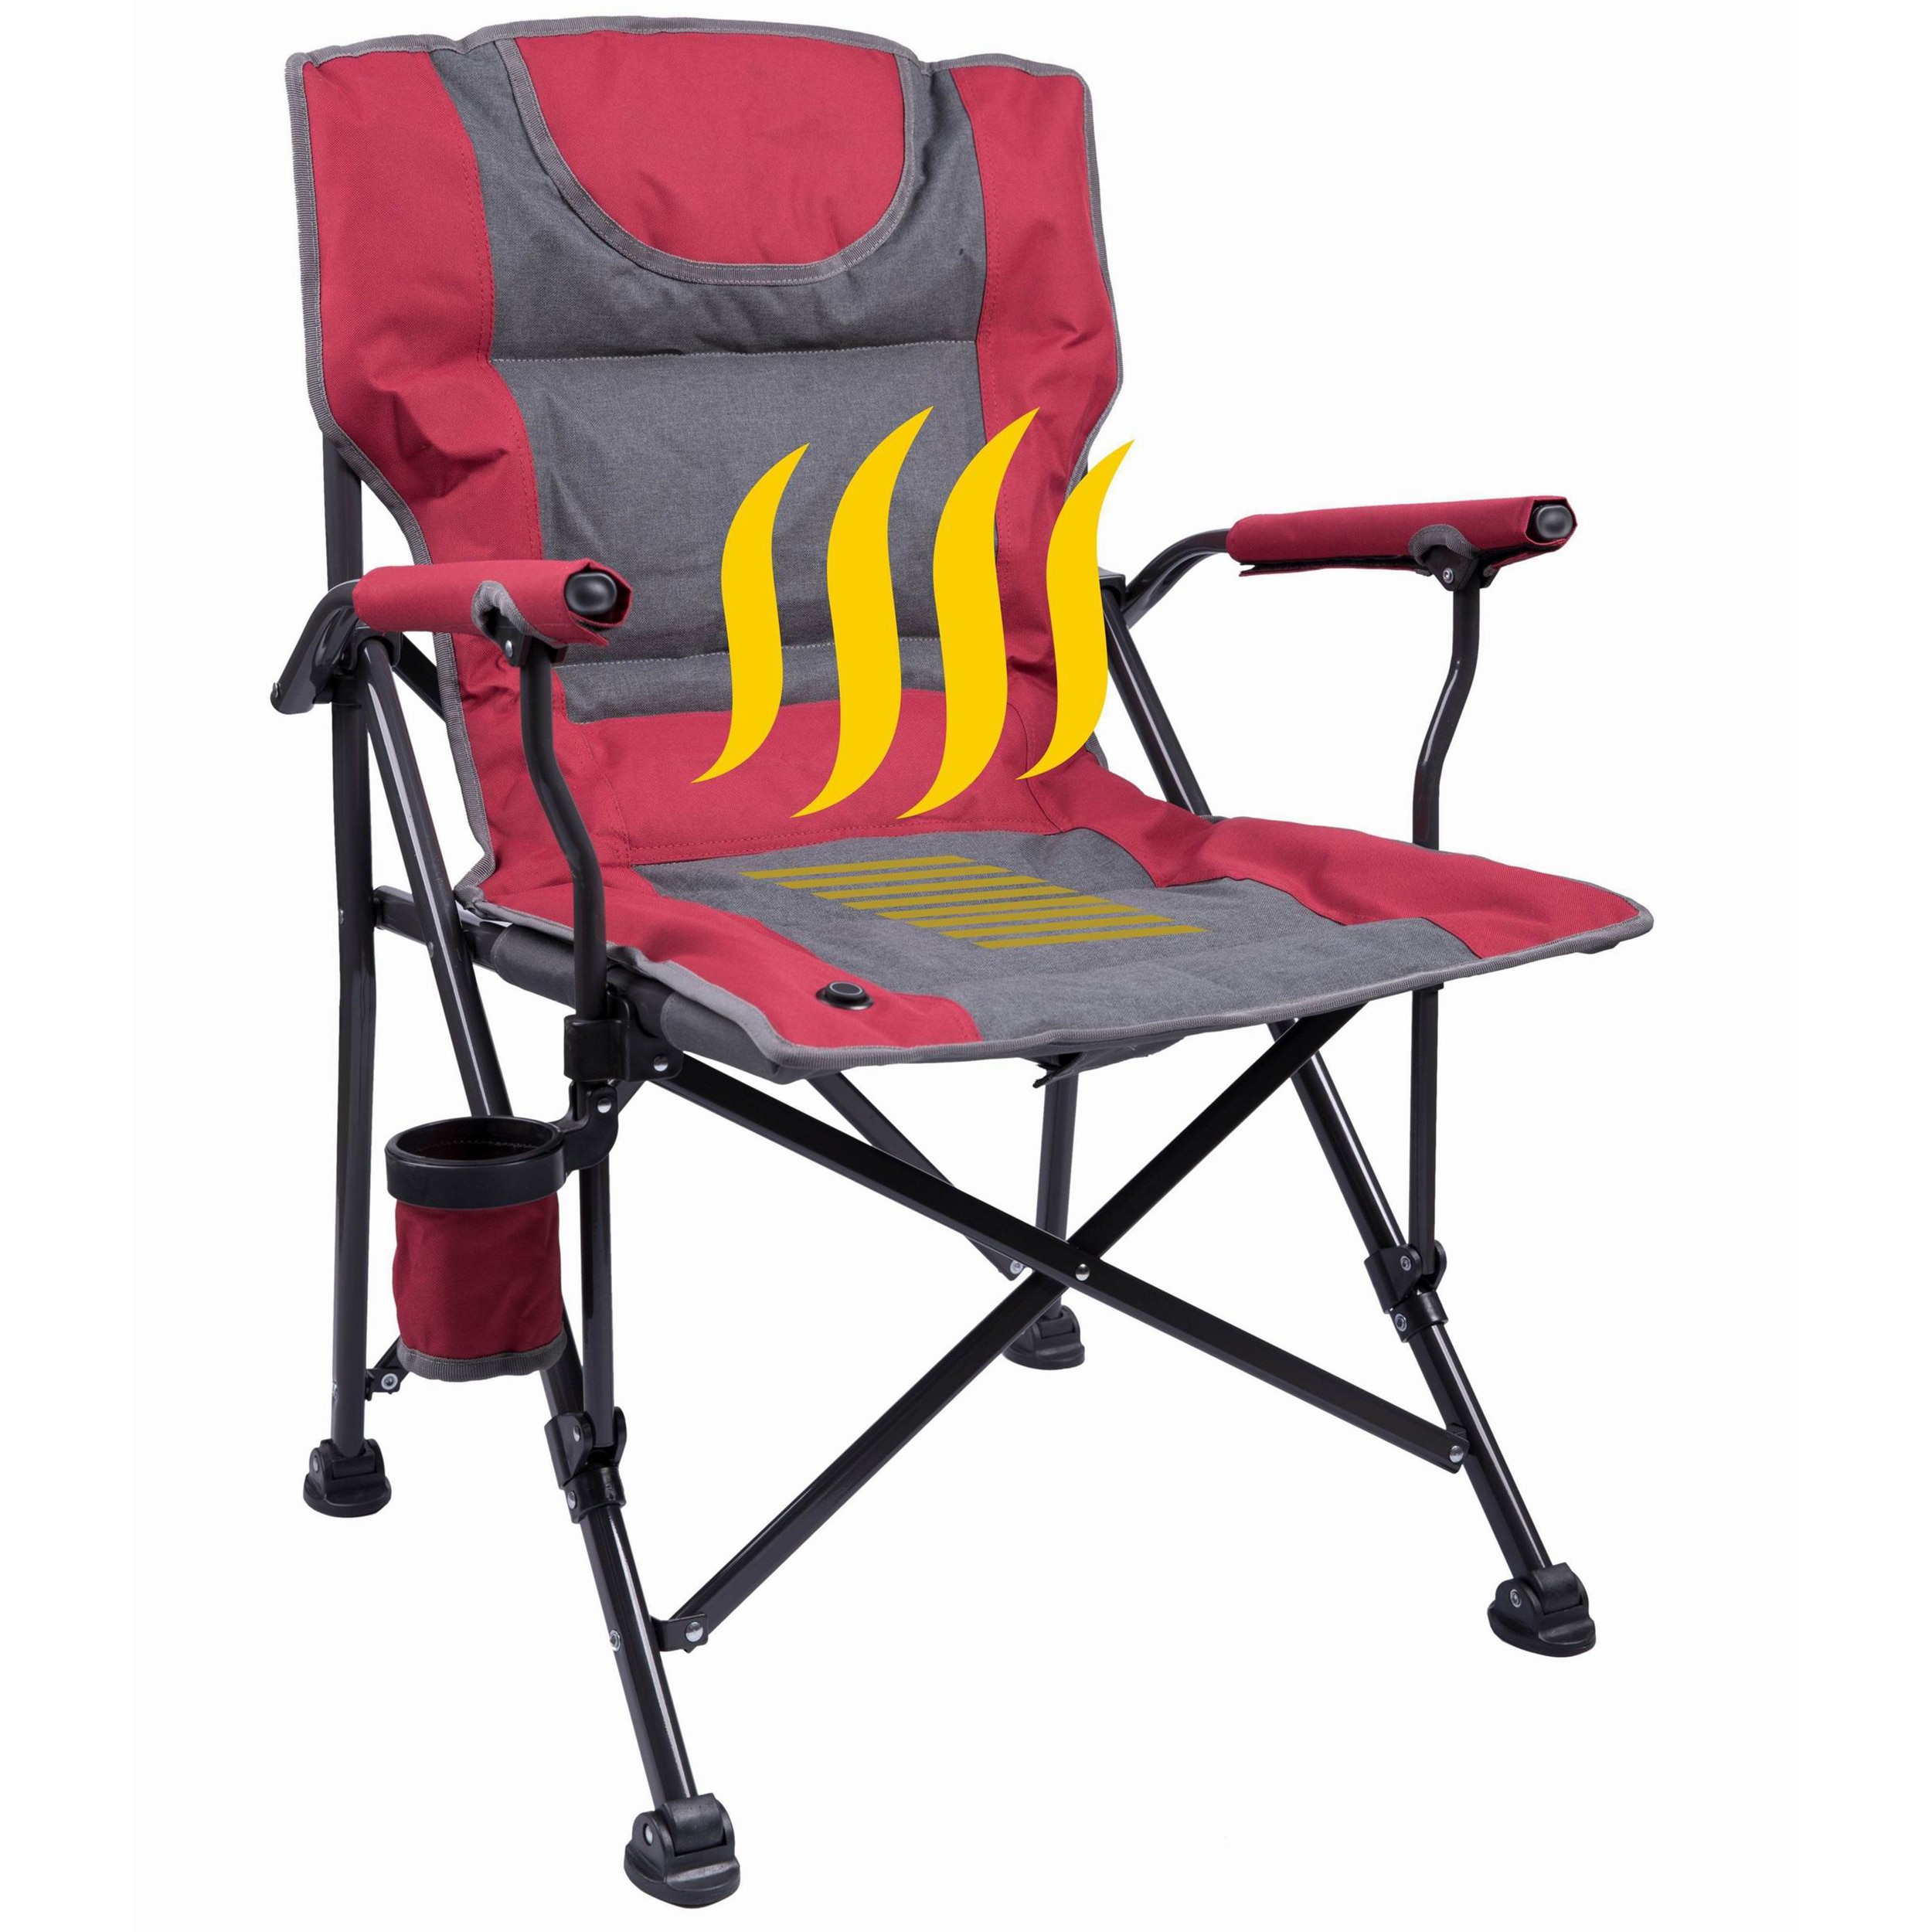 Backyard Expressions Beach & Camping Chairs at